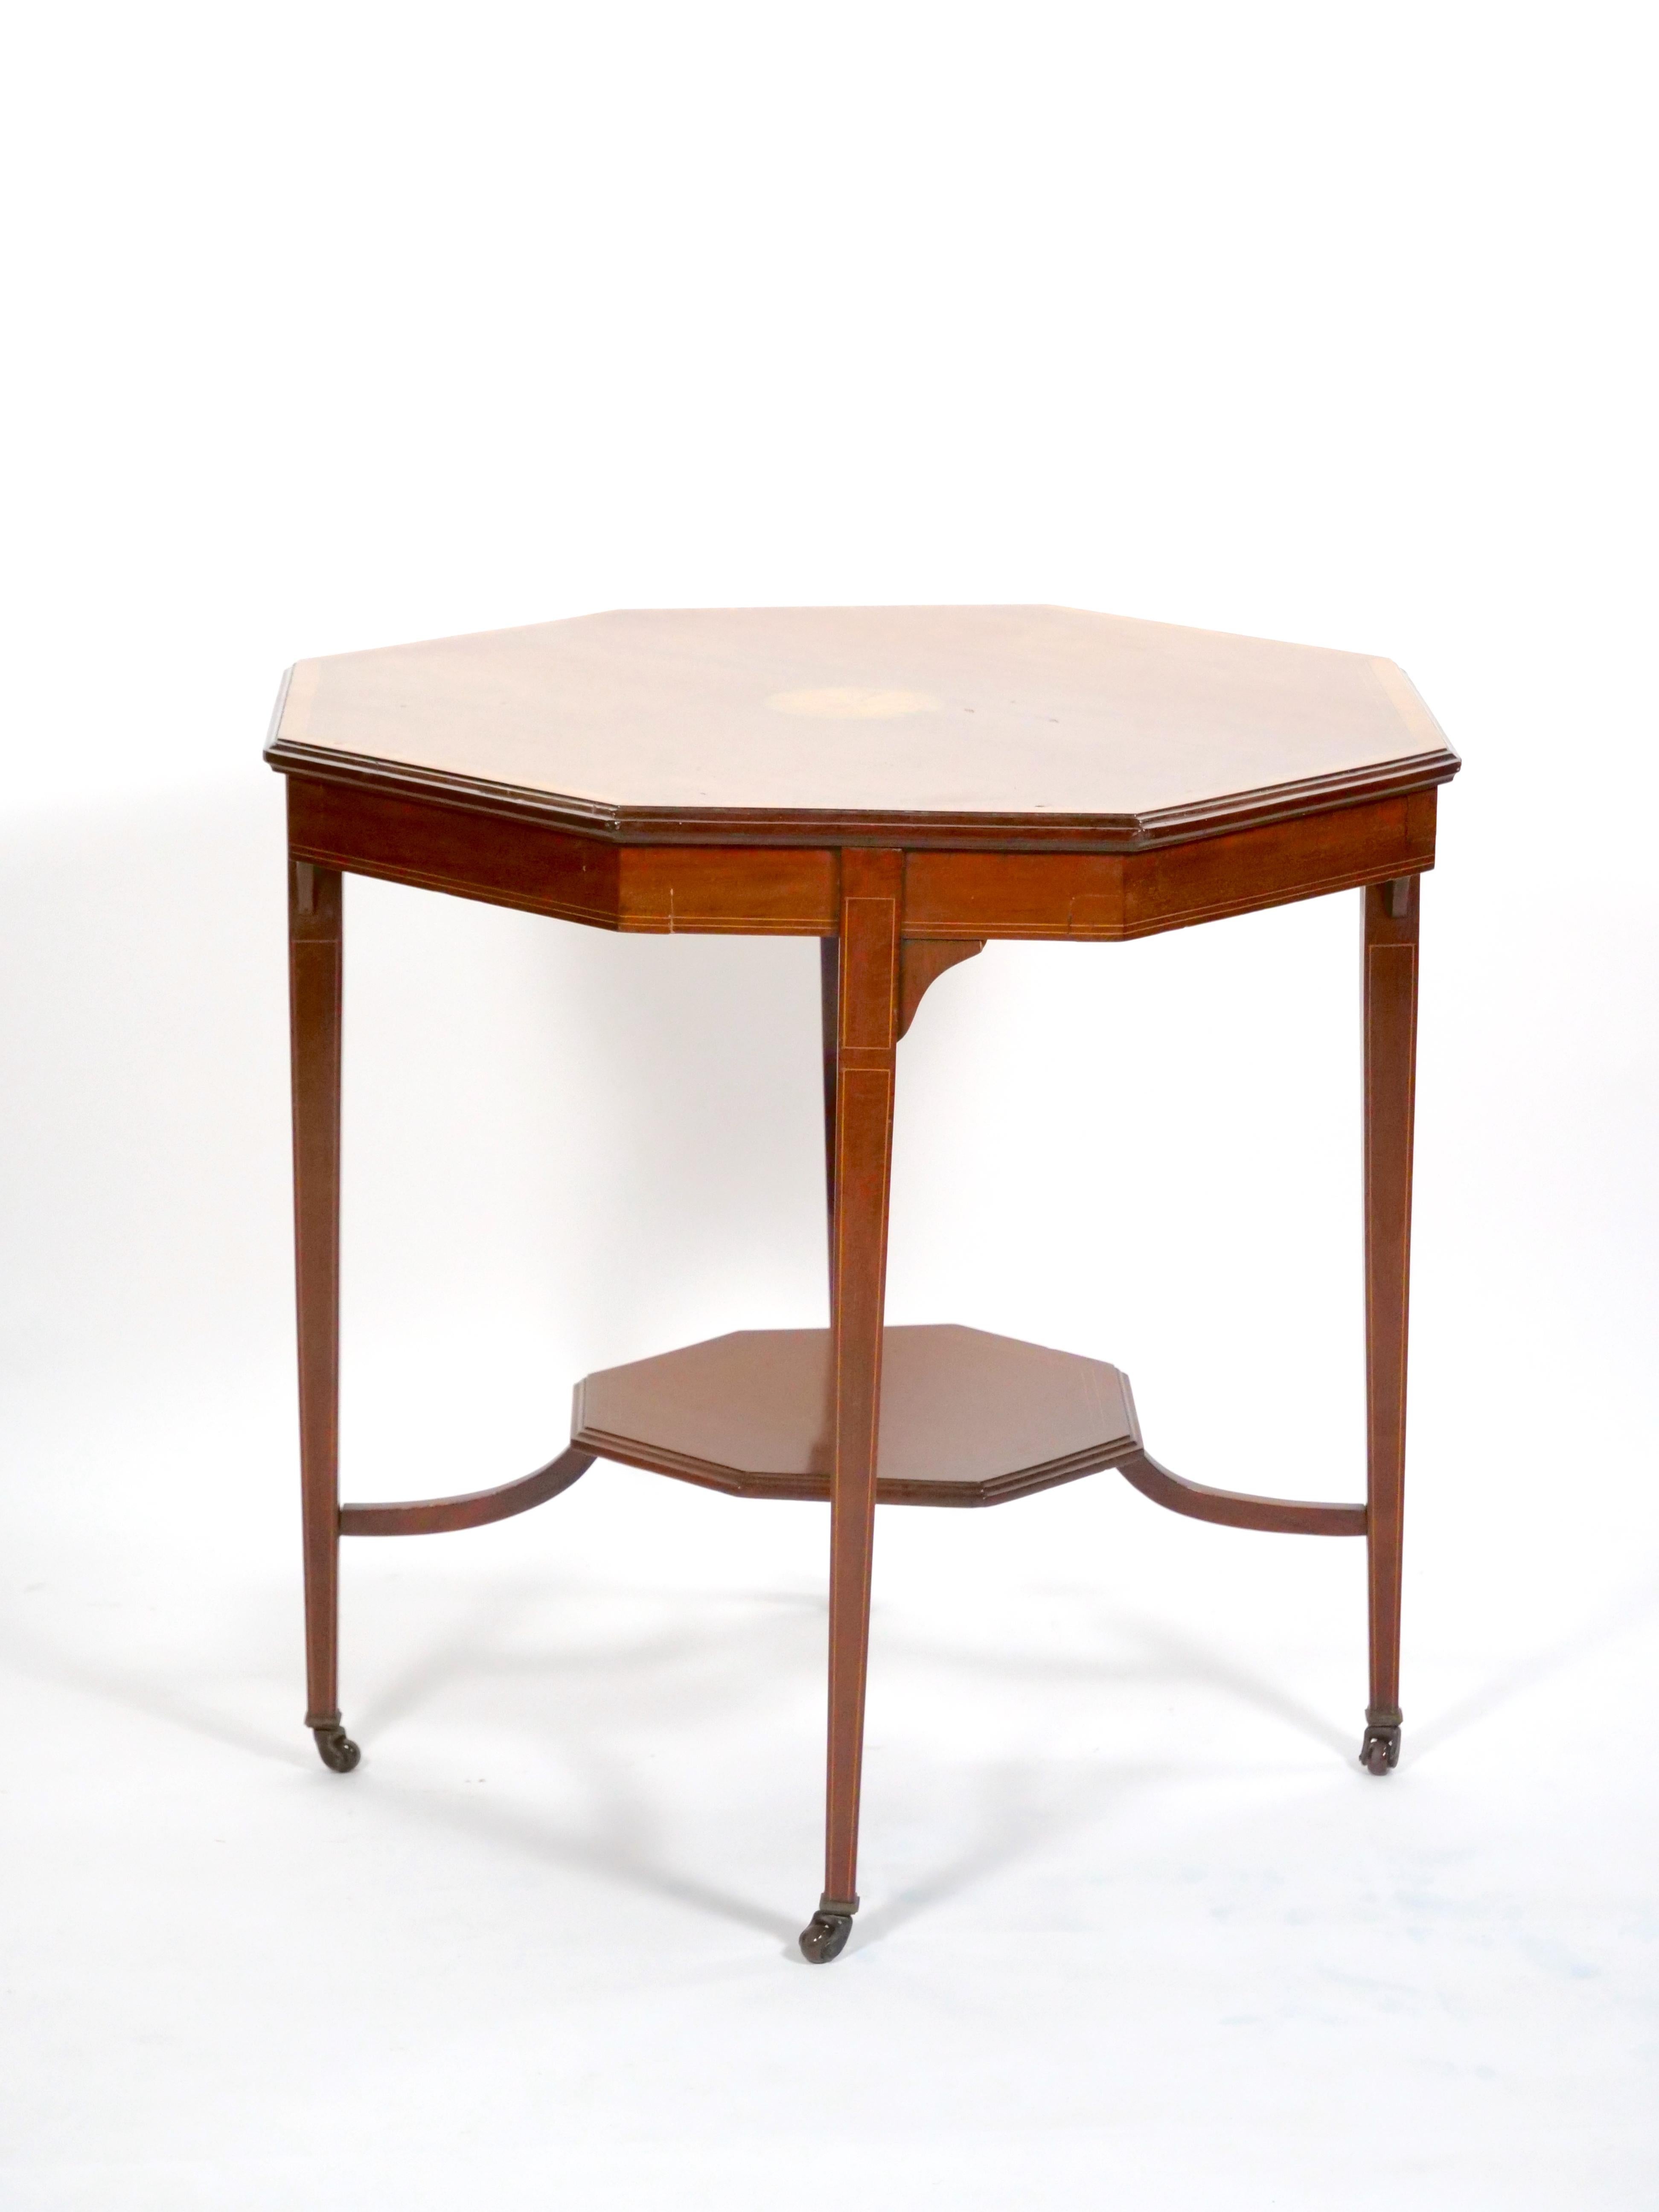 George III English Burl Mahogany Hexagonal Shape Inlay Decorated Top Center Table For Sale